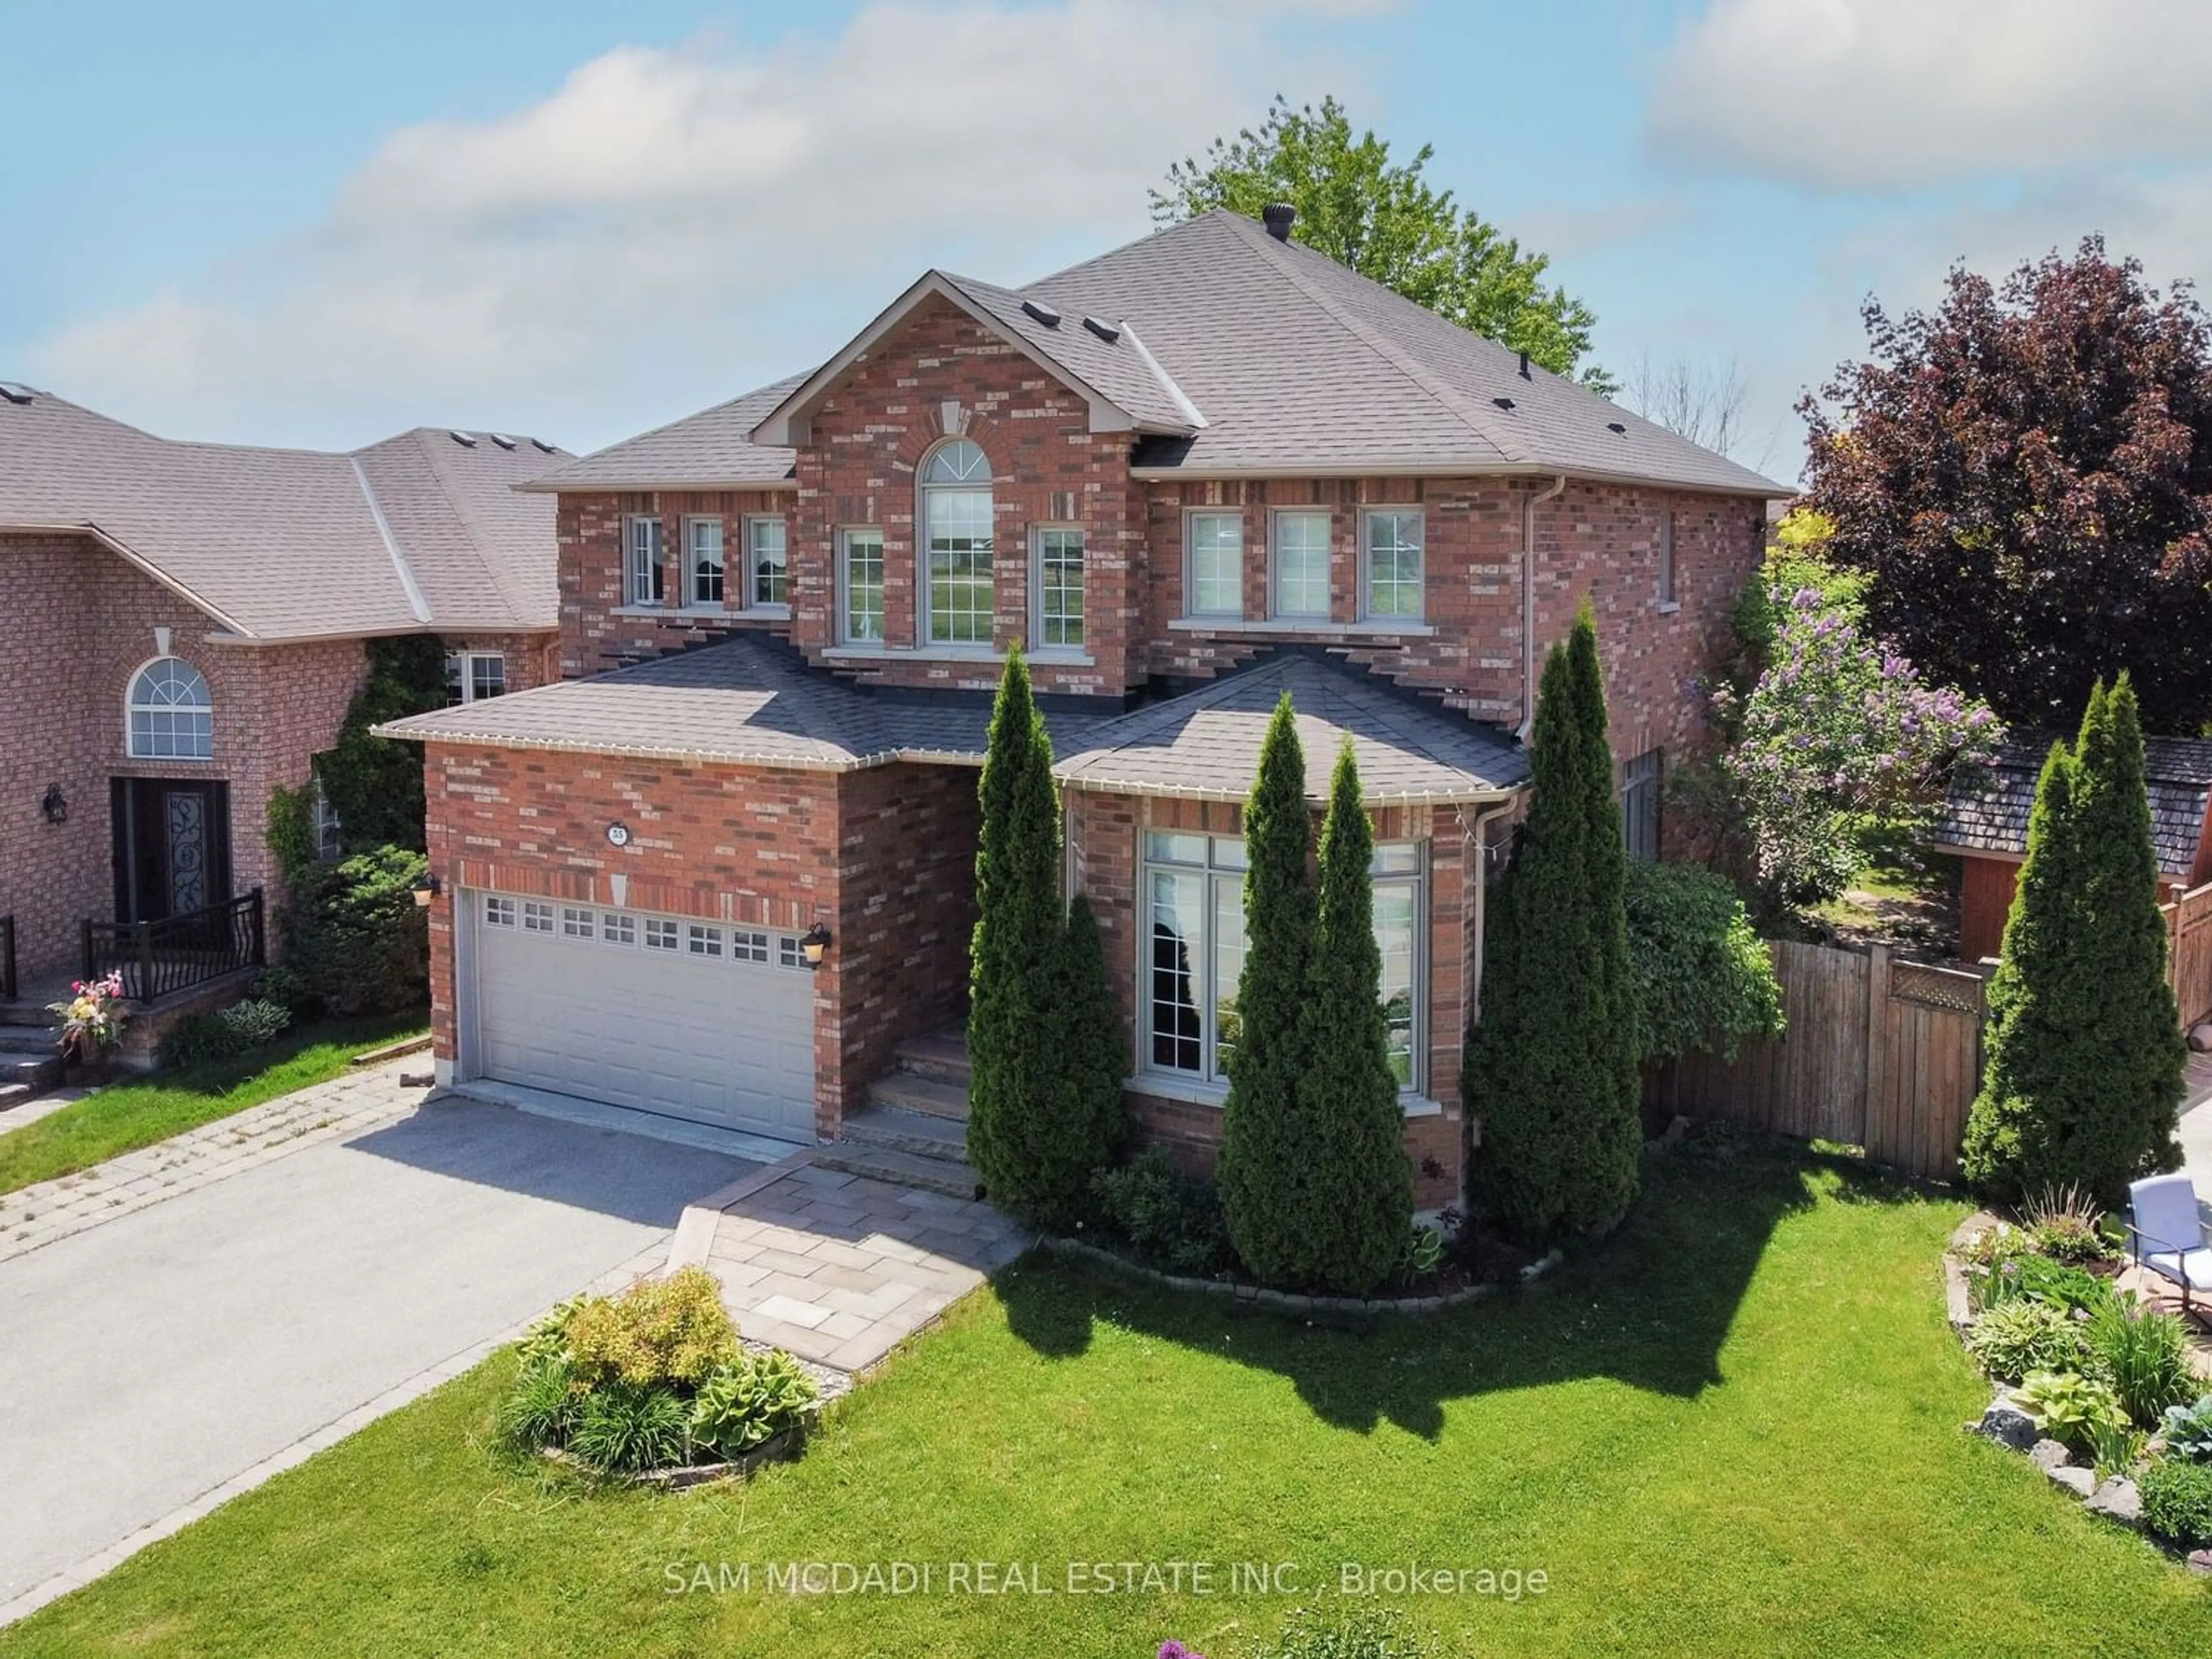 Home with brick exterior material for 35 Hanton Cres, Caledon Ontario L7E 2M3